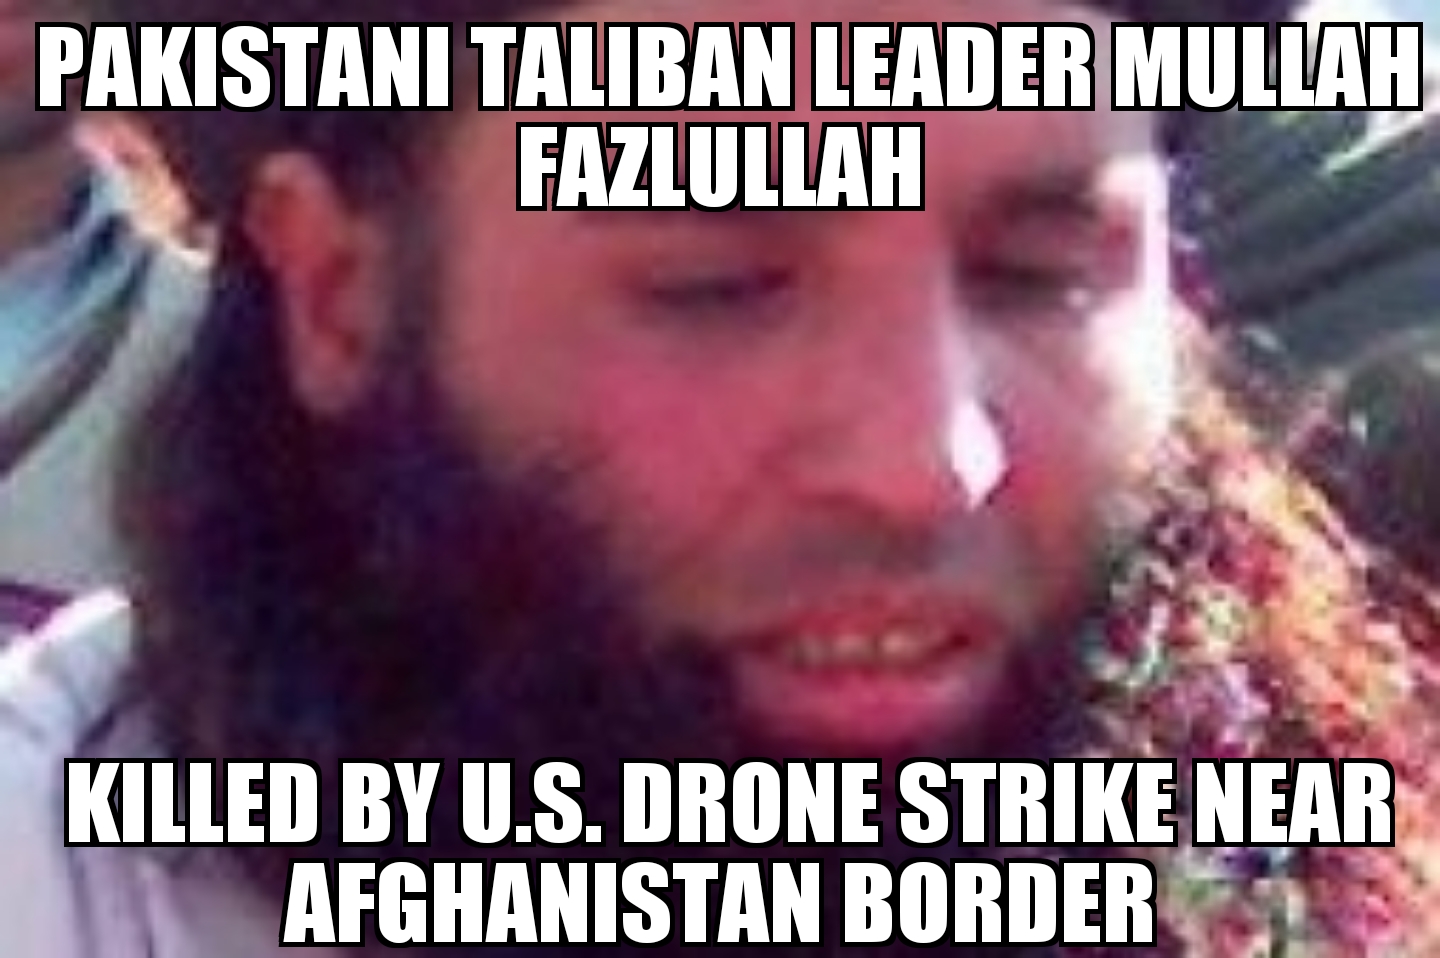 Pakistani Taliban leader Mullah Fazlullah killed